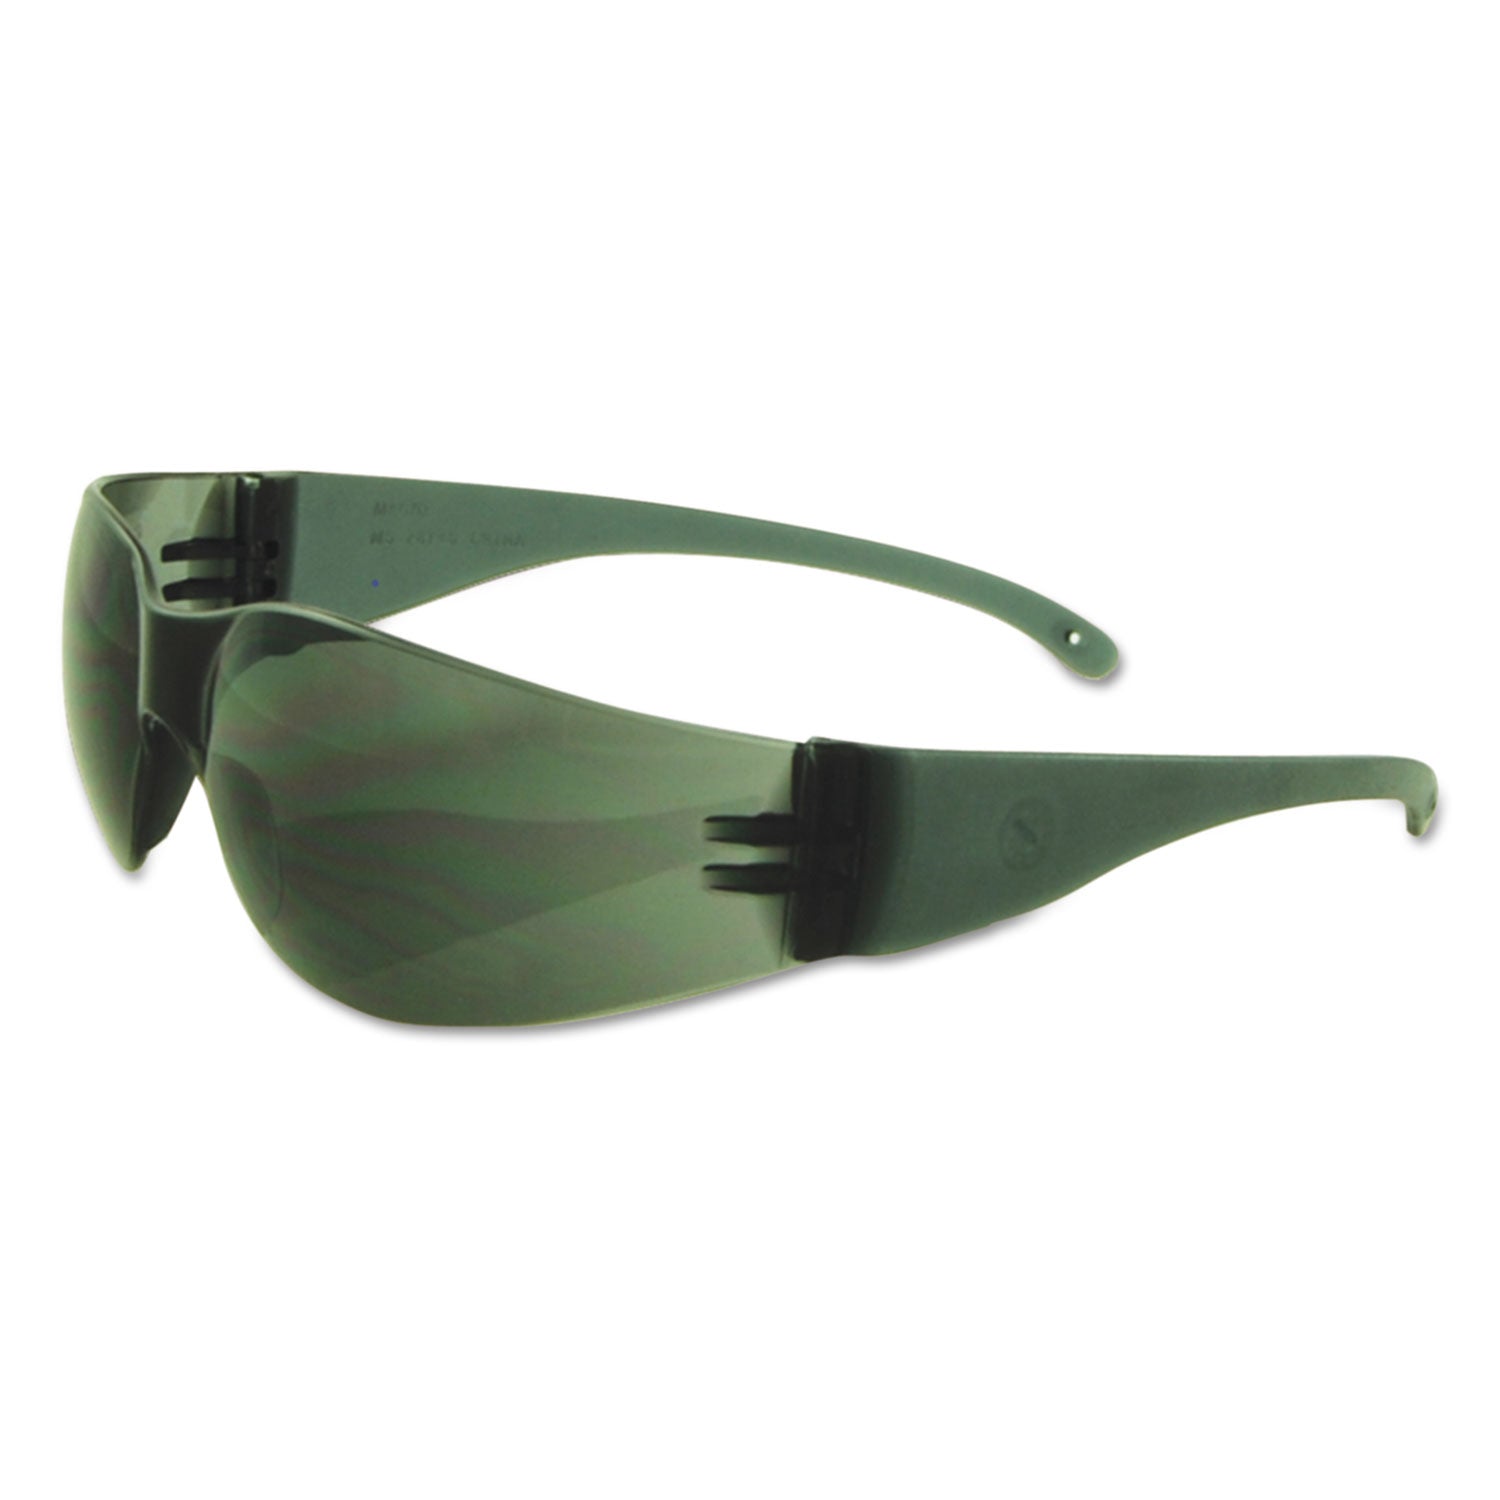 safety-glasses-gray-frame-gray-lens-polycarbonate-dozen_bwk00023 - 1